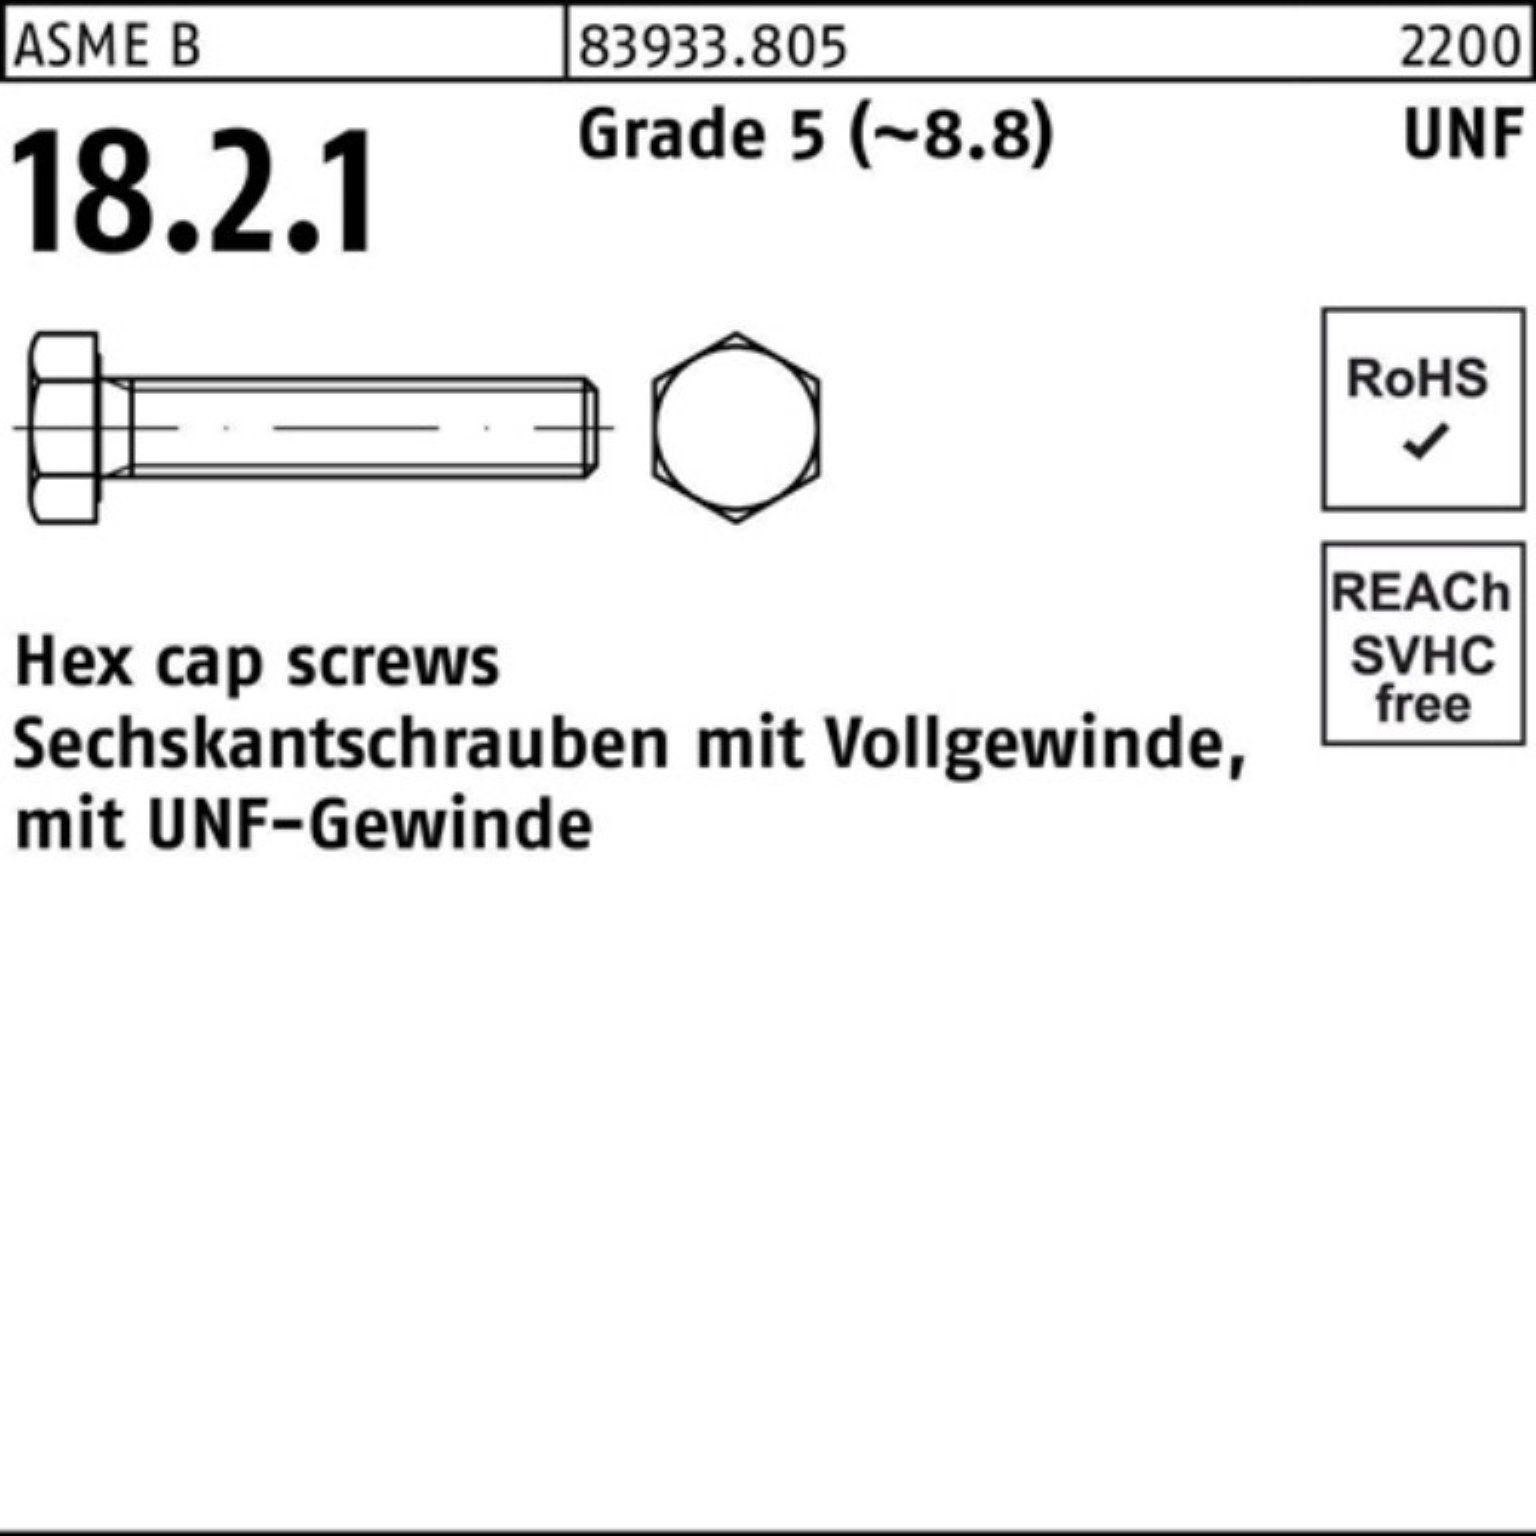 Reyher Sechskantschraube 100er Pack Sechskantschraube R 83933 UNF-Gewinde VG 1/4x 7/8 Grade 5